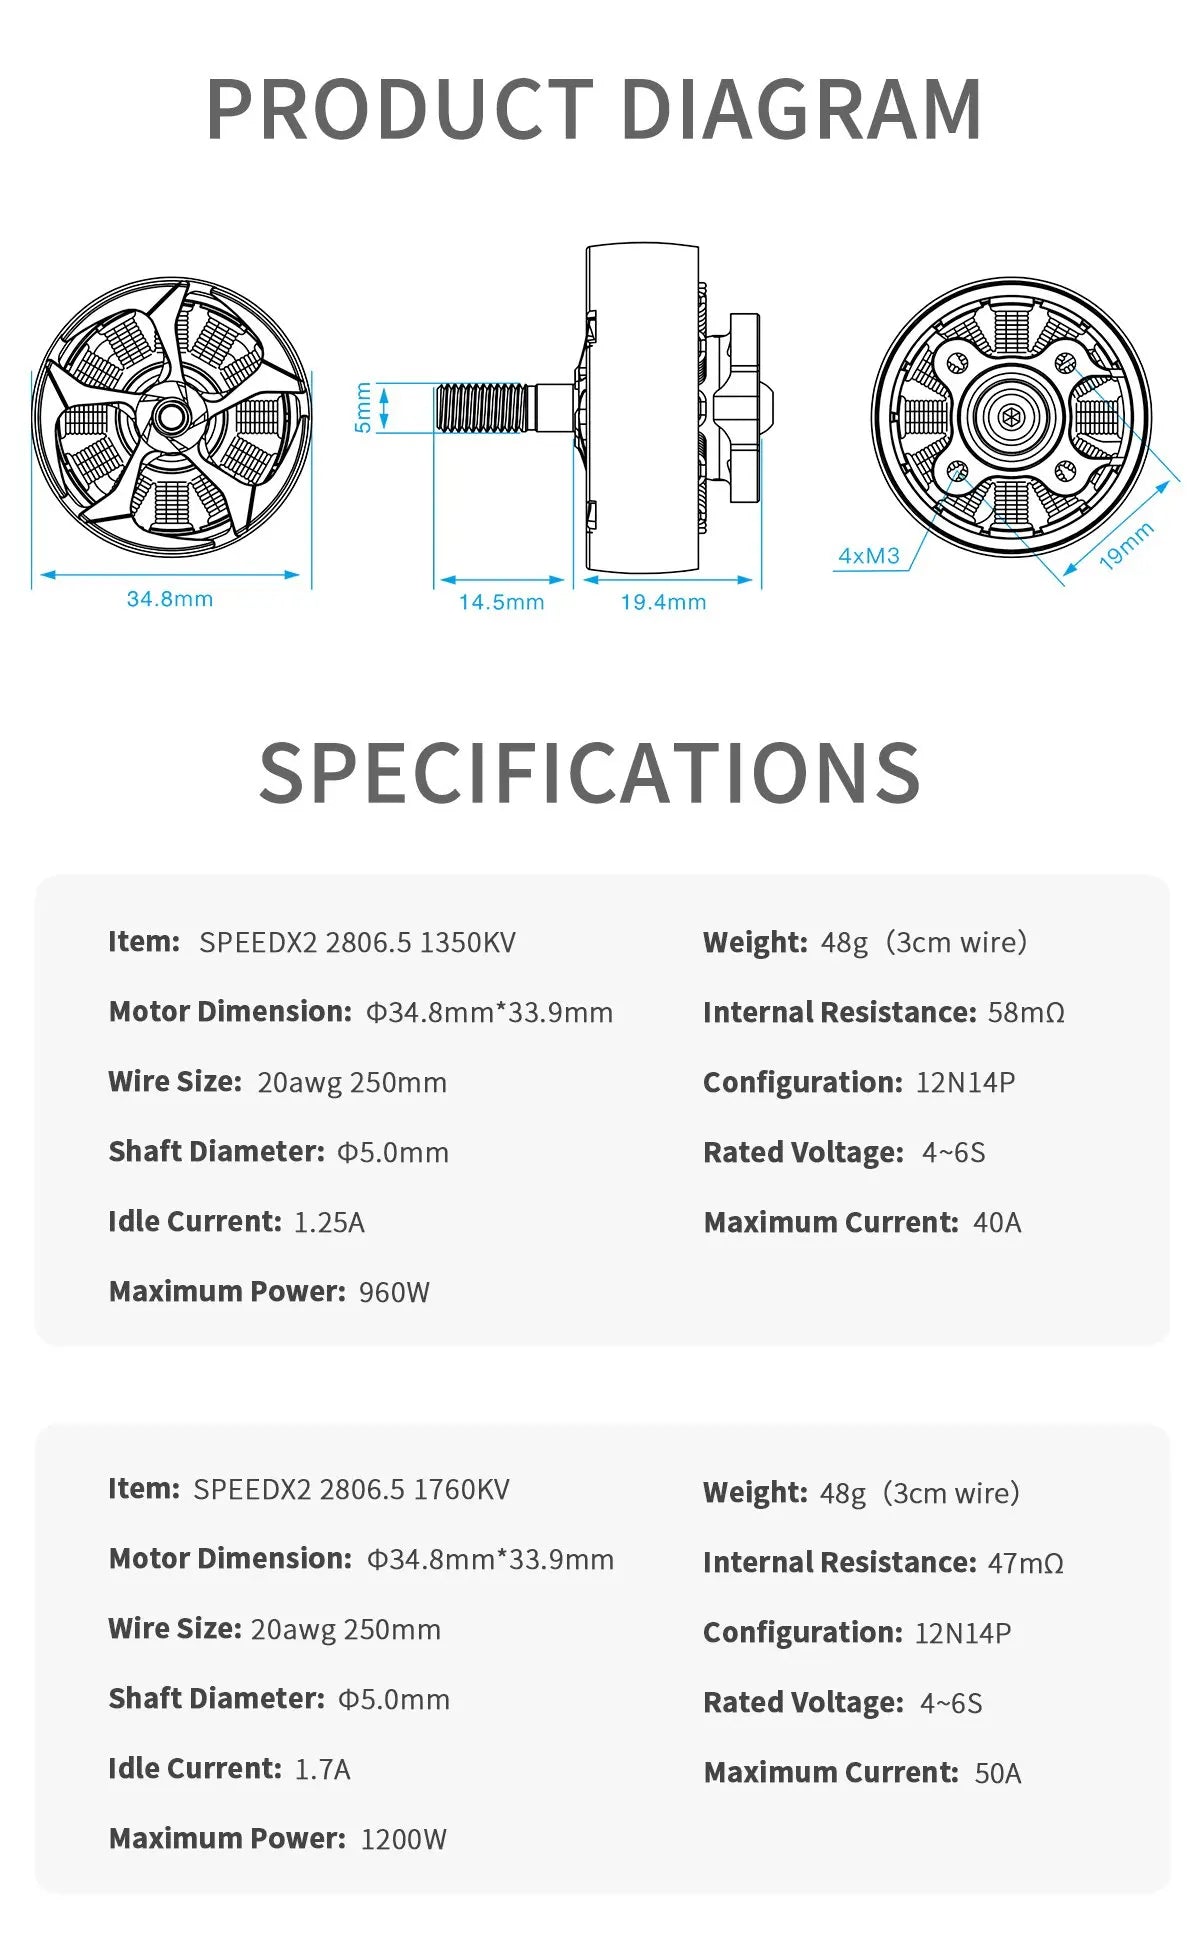 GEPRC SPEEDX2 2806.5 1350KV/1760KV Motor, Motor Dimension: 034.8mm*33.9mm Internal Resistance: 58m0 Wire